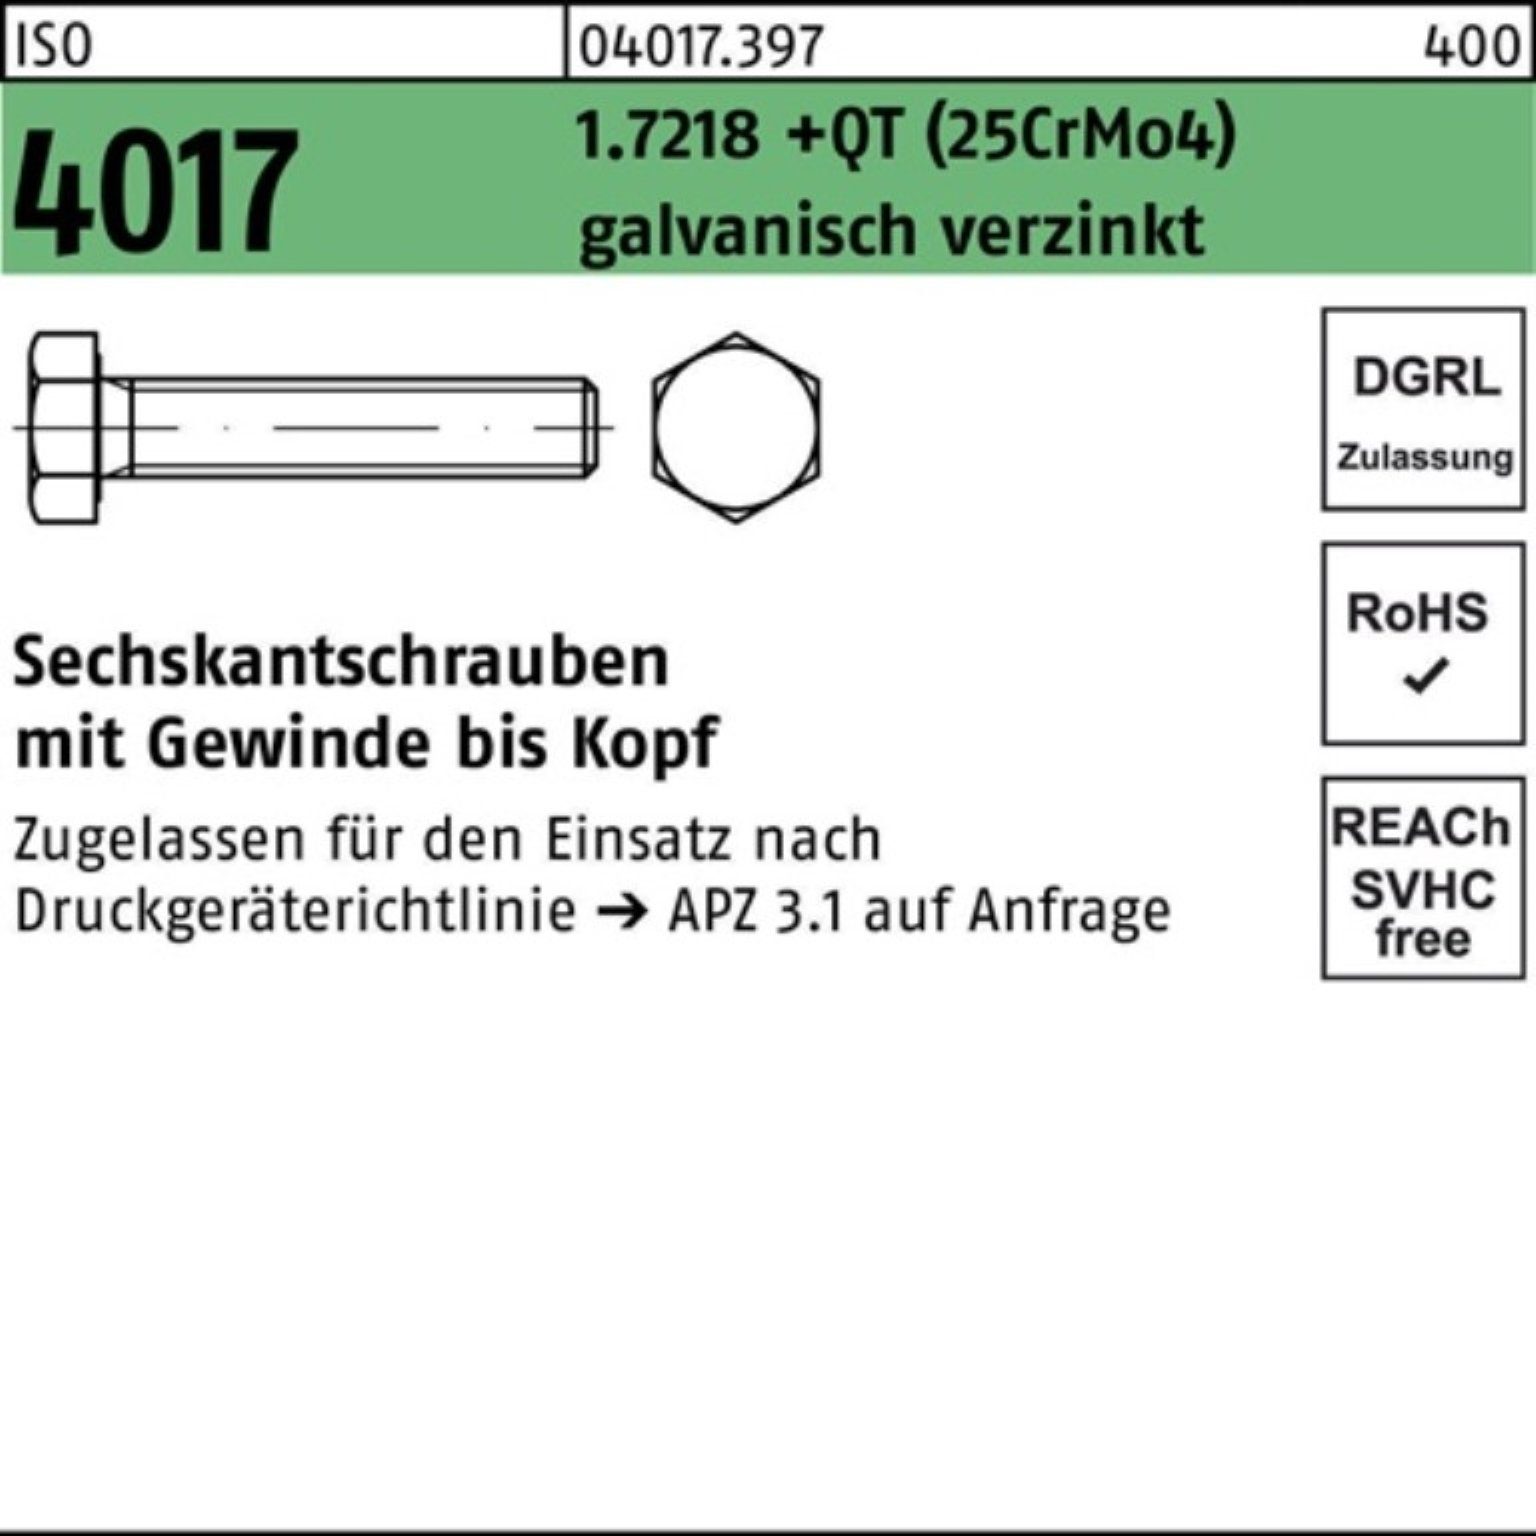 Bufab Sechskantschraube 100er Pack Sechskantschraube 1.7218 (25CrMo4) +QT g M24x40 4017 VG ISO